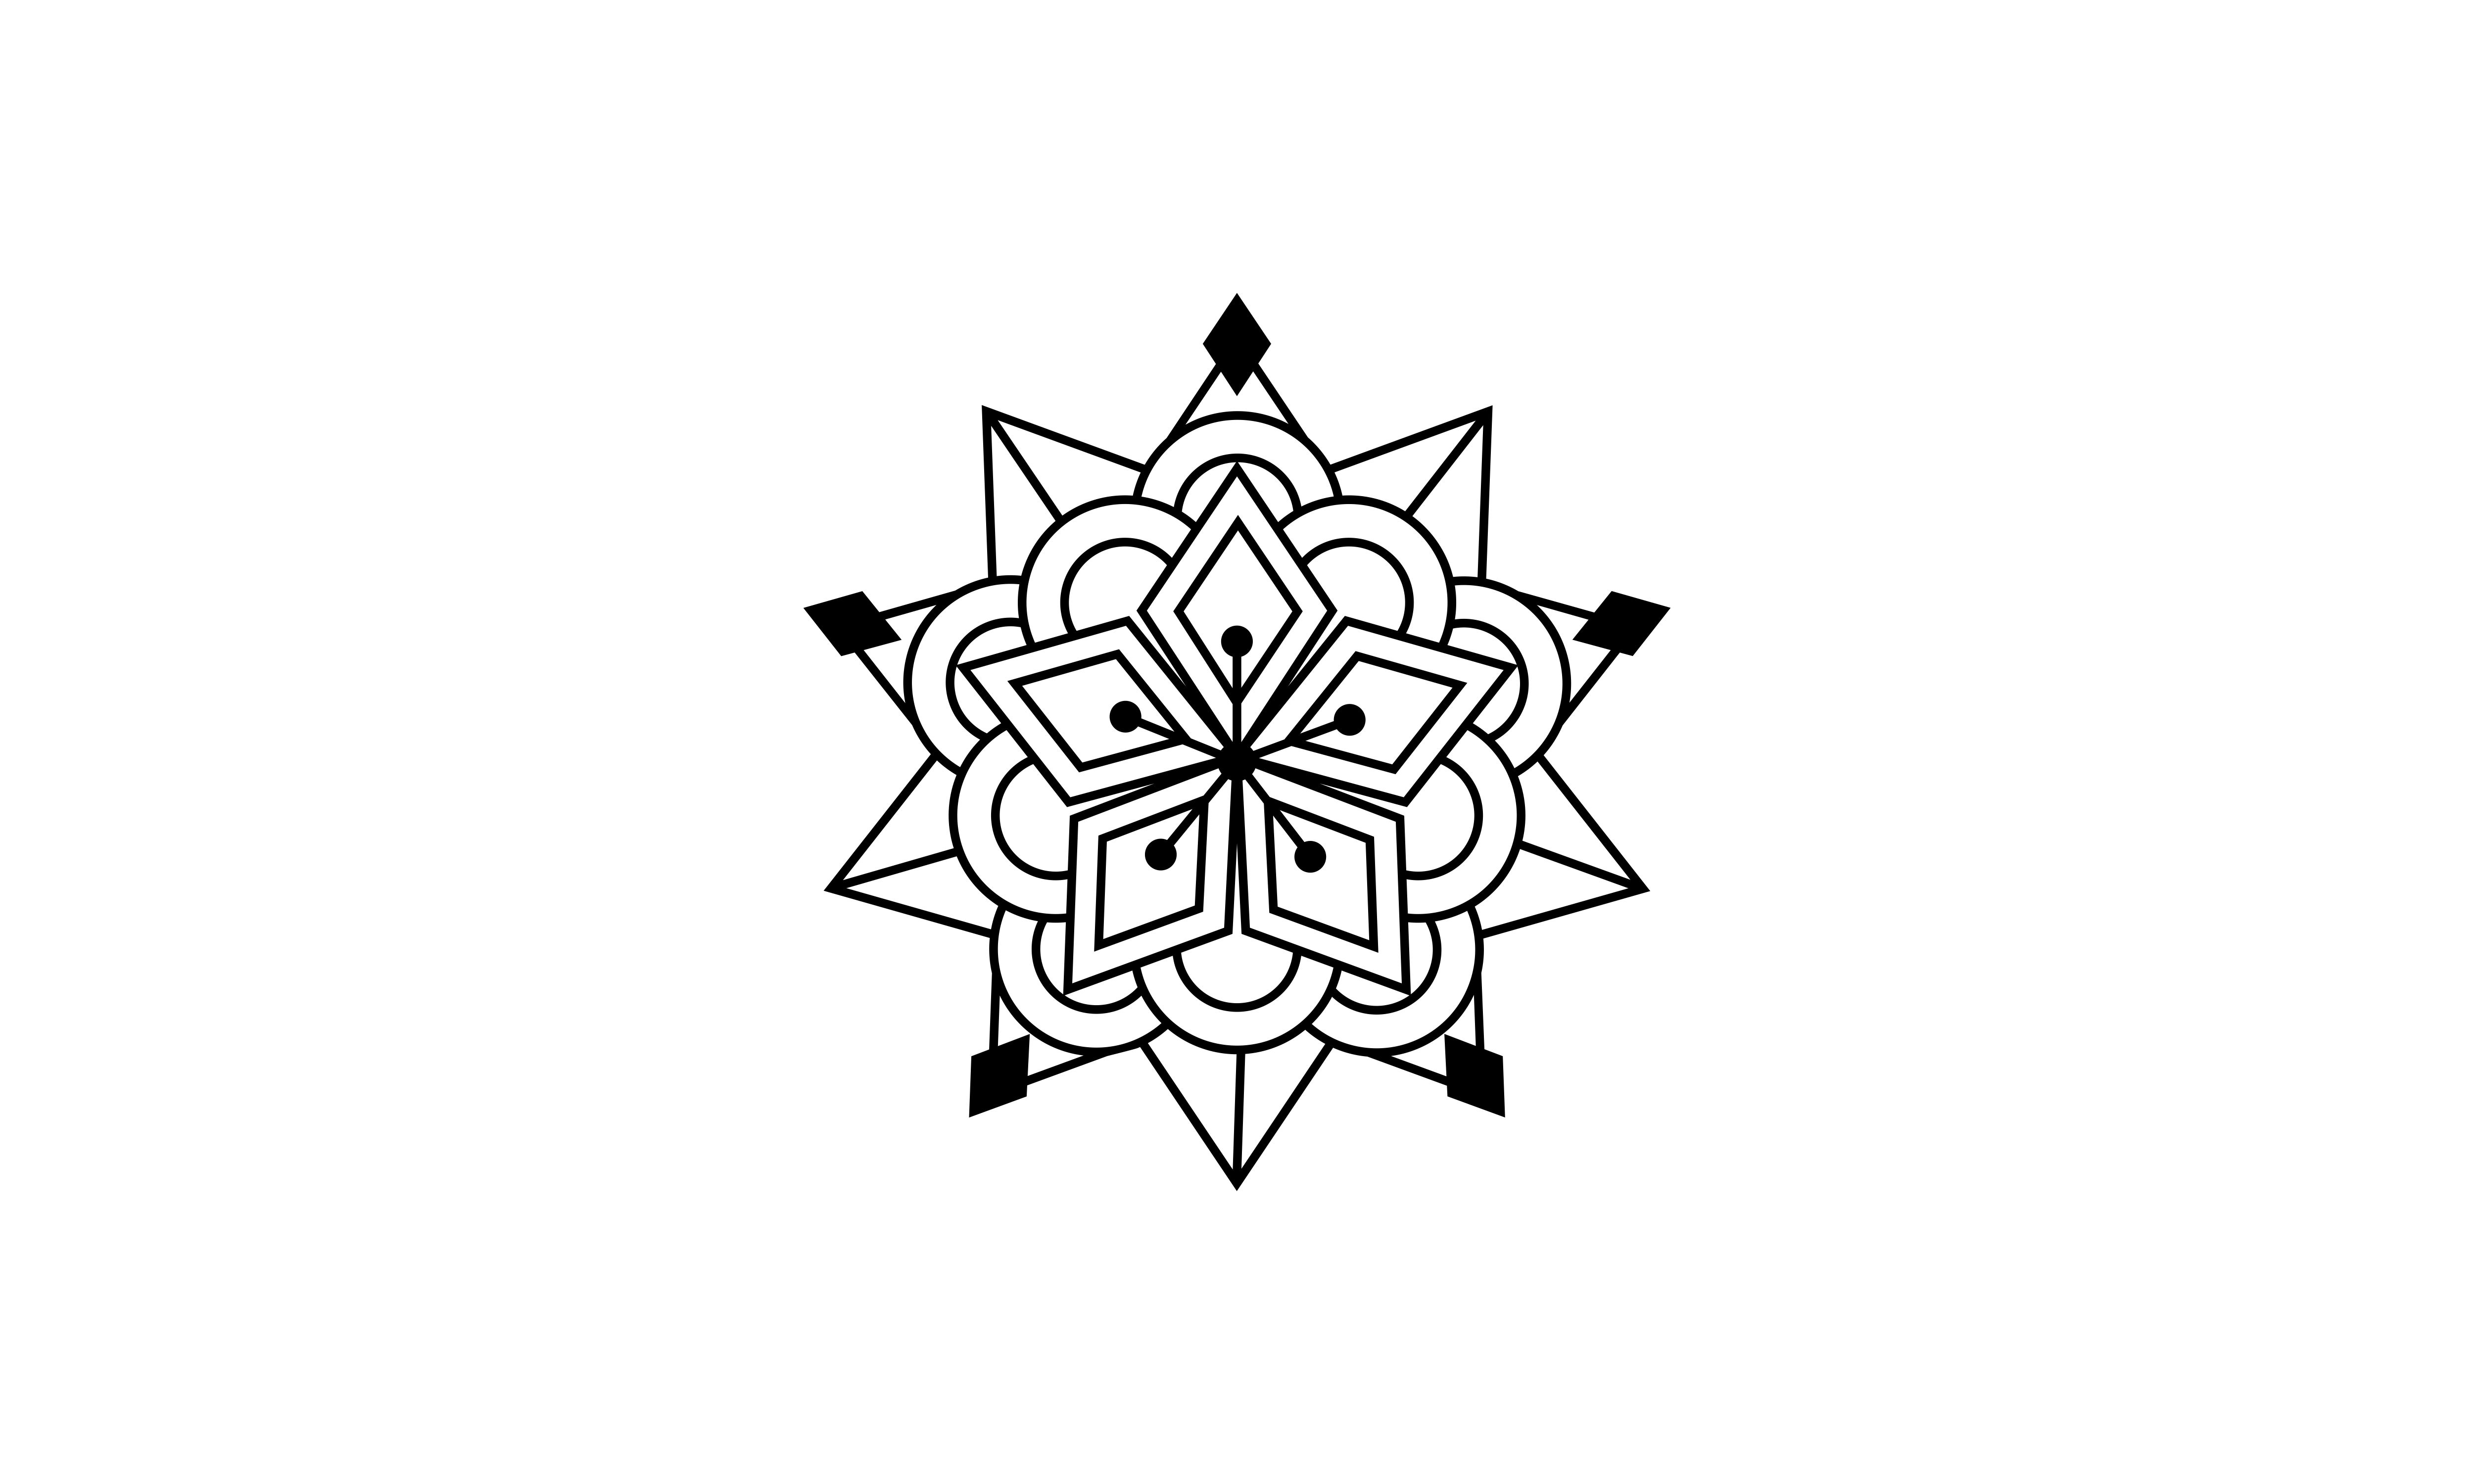 Mandala decorative element illustration. Geometric logo template